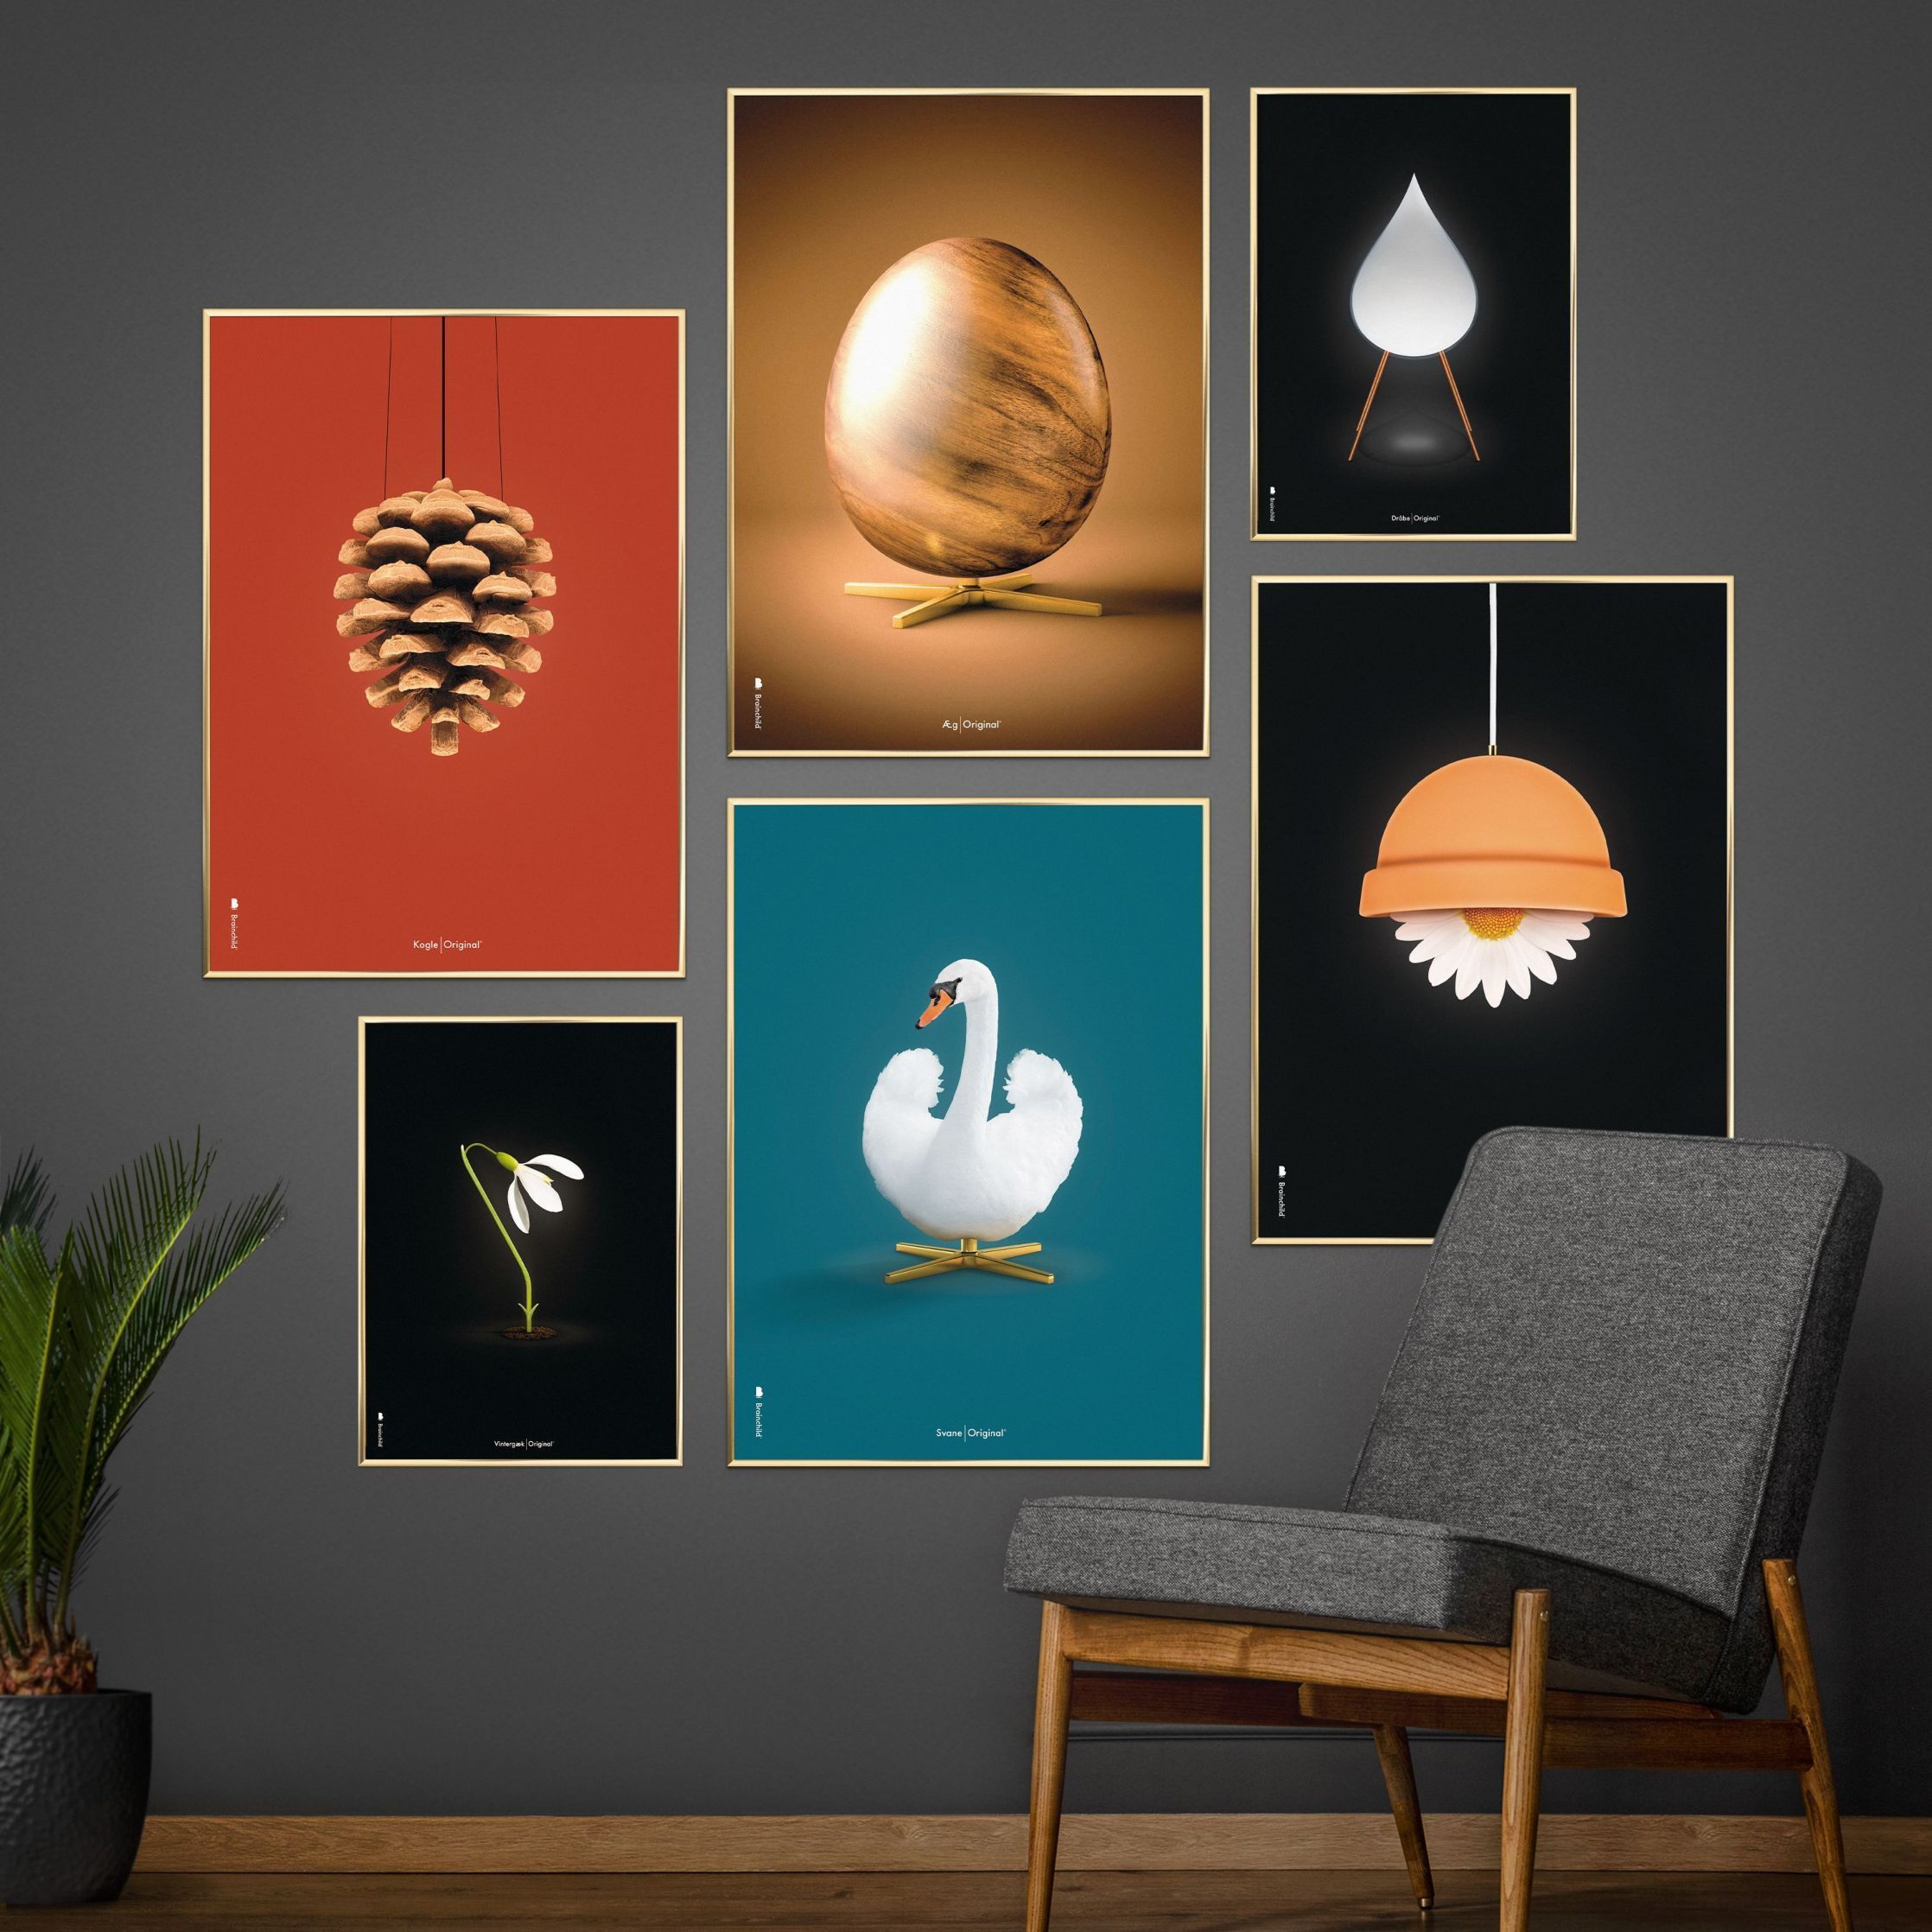 Brainchild Swan Classic Poster, Dark Wood Frame A5, Petroleum Blue Background